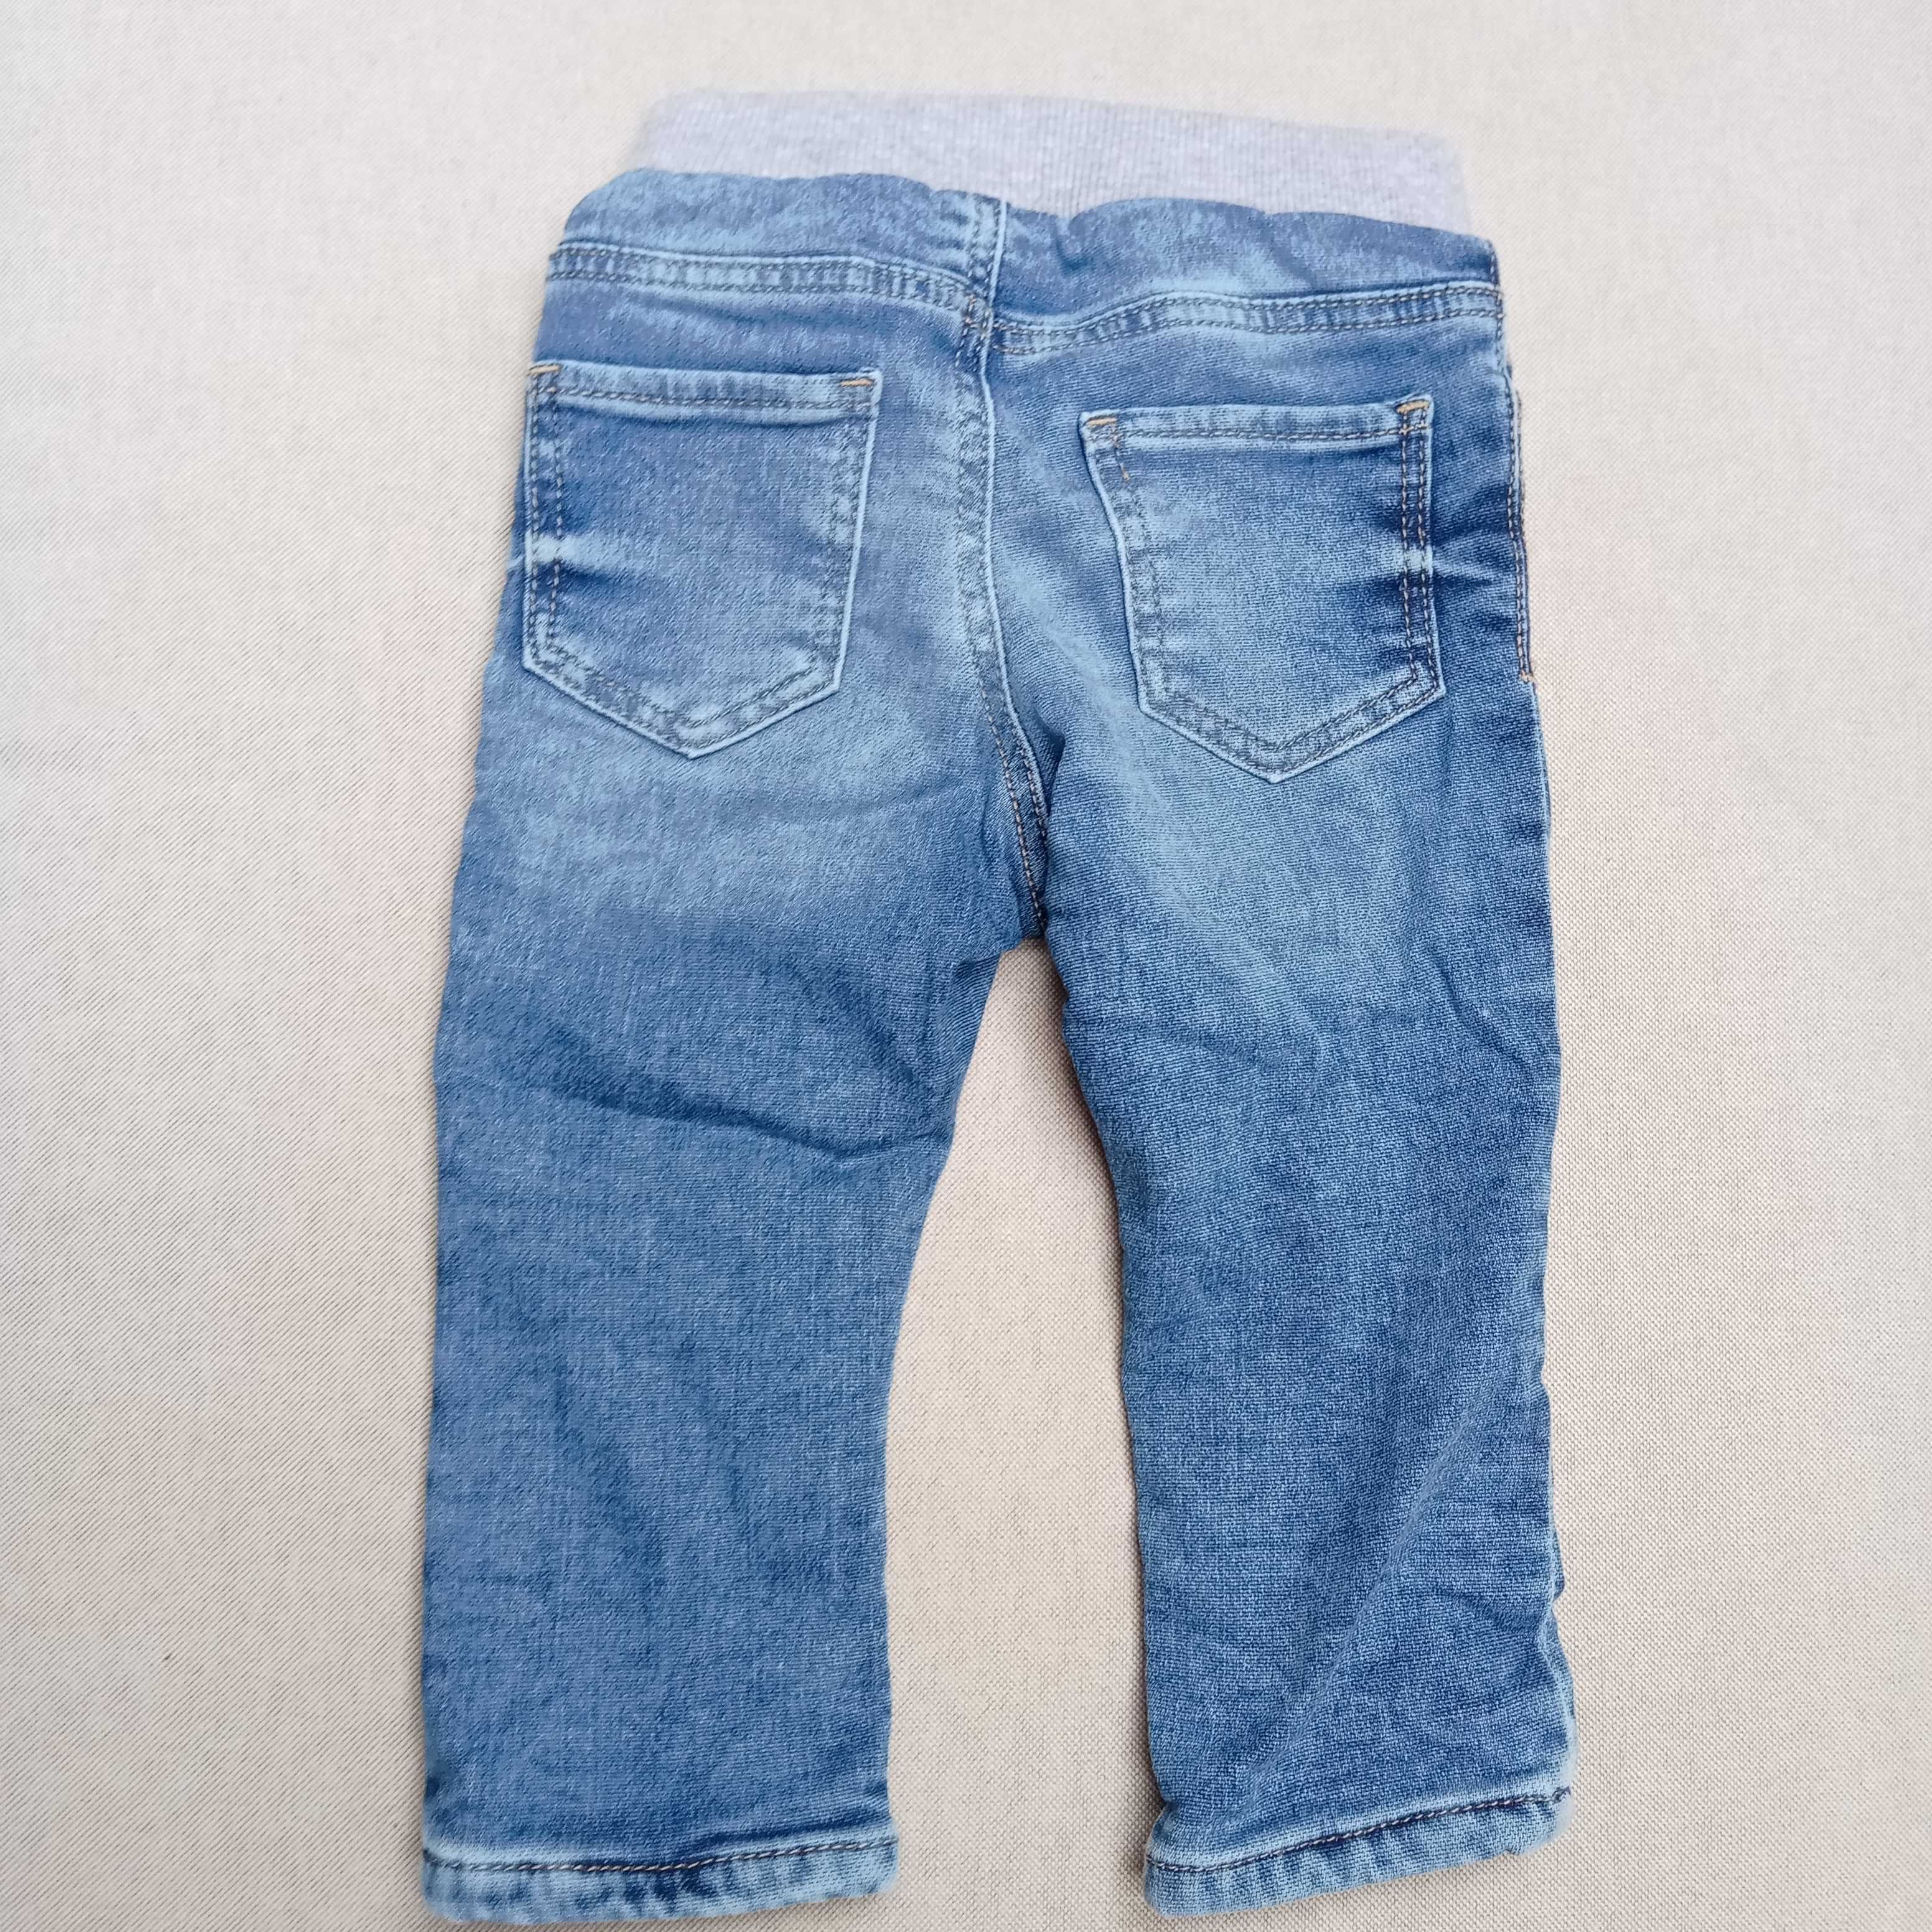 spodnie jeansy grube ocieplane rozmiar 74